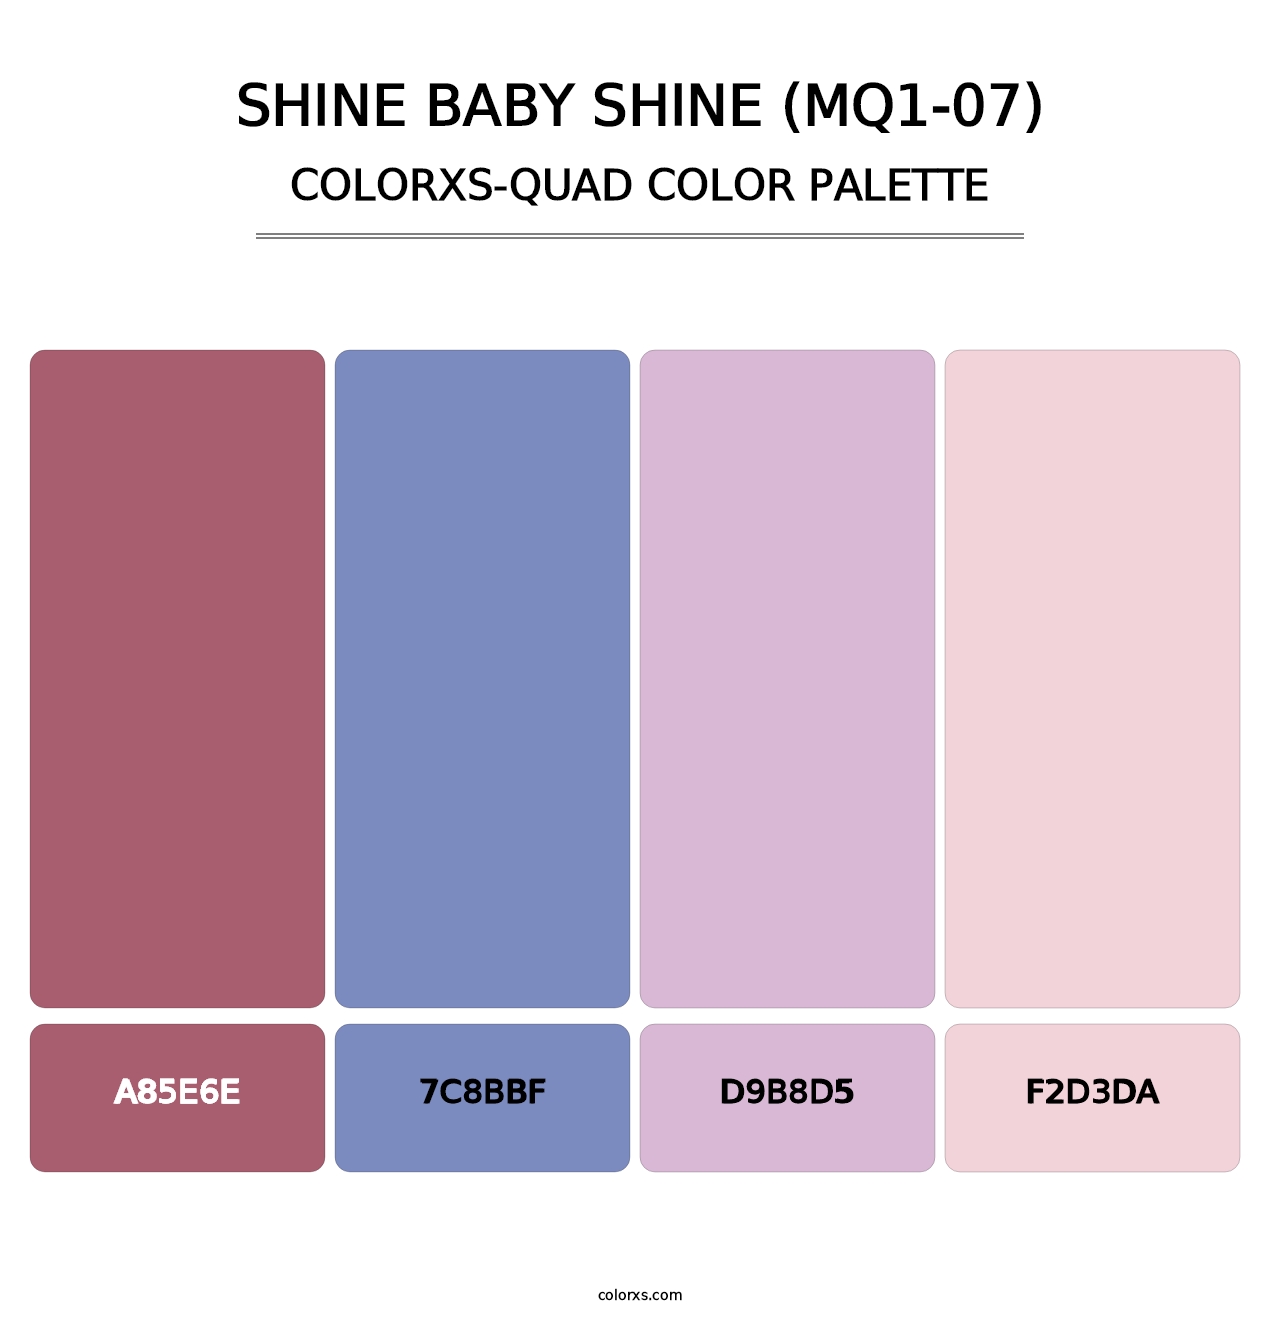 Shine Baby Shine (MQ1-07) - Colorxs Quad Palette